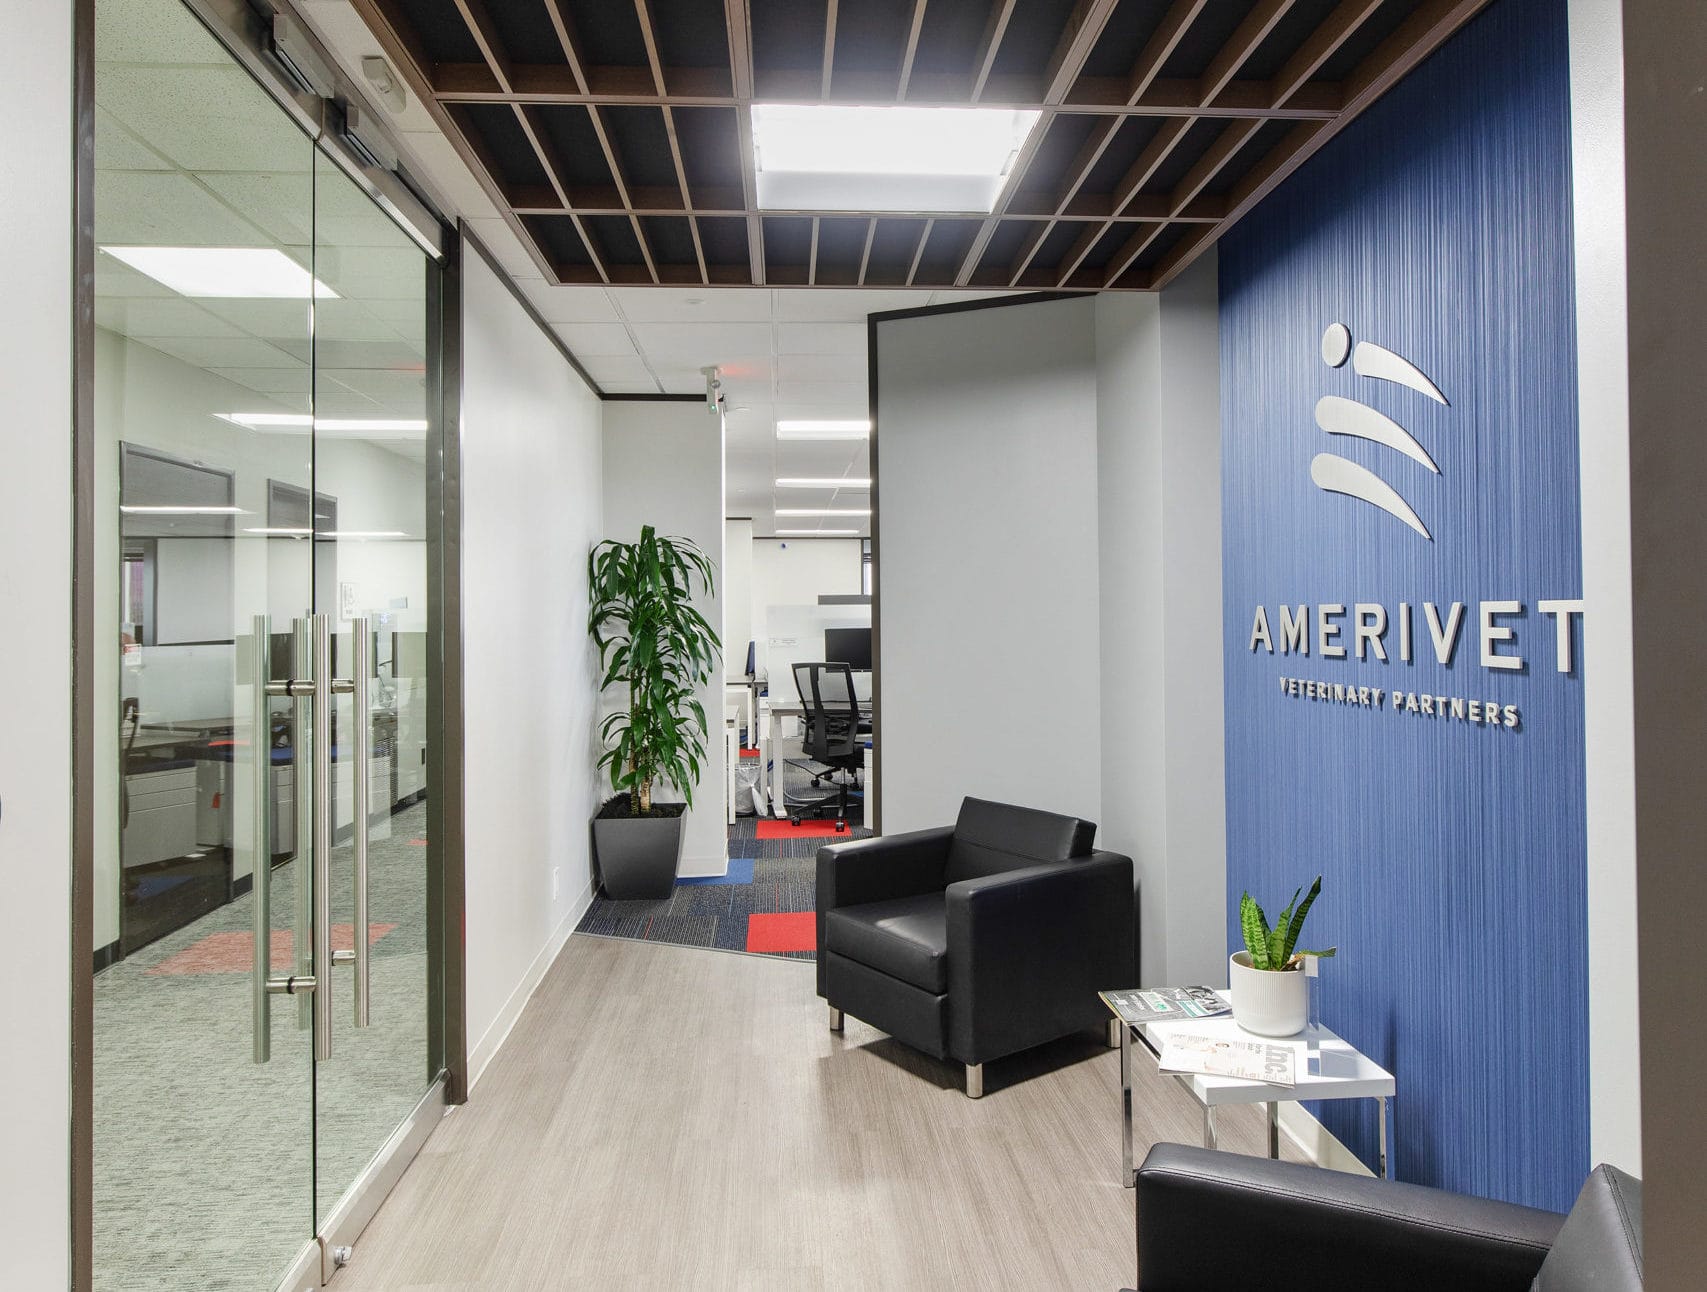 Amerivet, San Antonio’s Business of the Year Relocates HQ to Hartman’s Energy Plaza Building